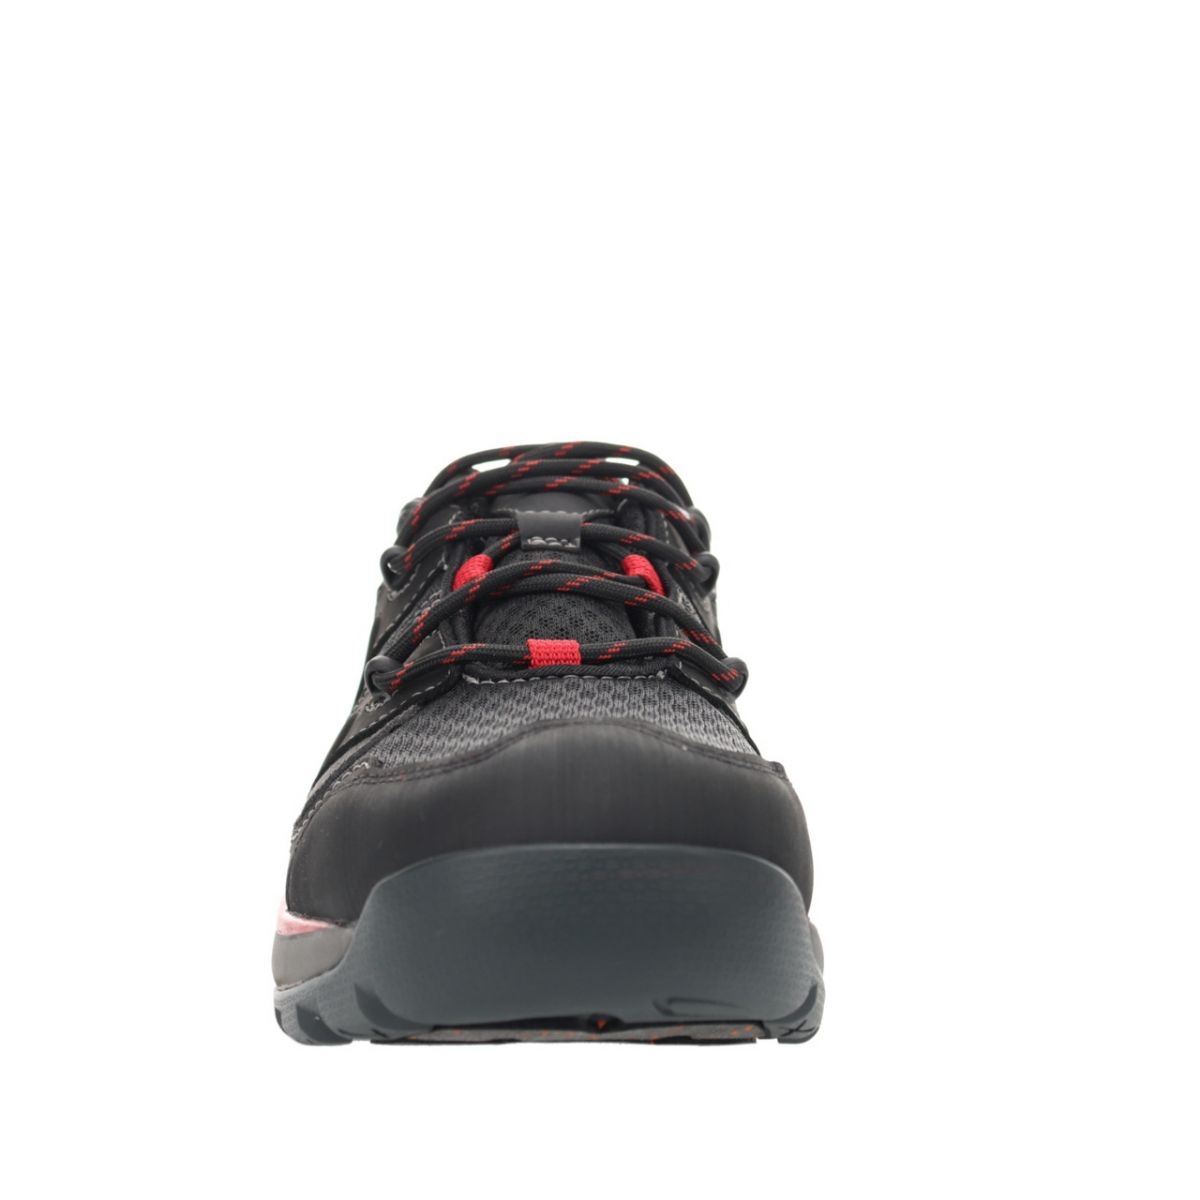 Propet Men's Vercors Hiking Shoe Black/Red - MOA002SBRD BLACK/RED - BLACK/RED, 9 X-Wide